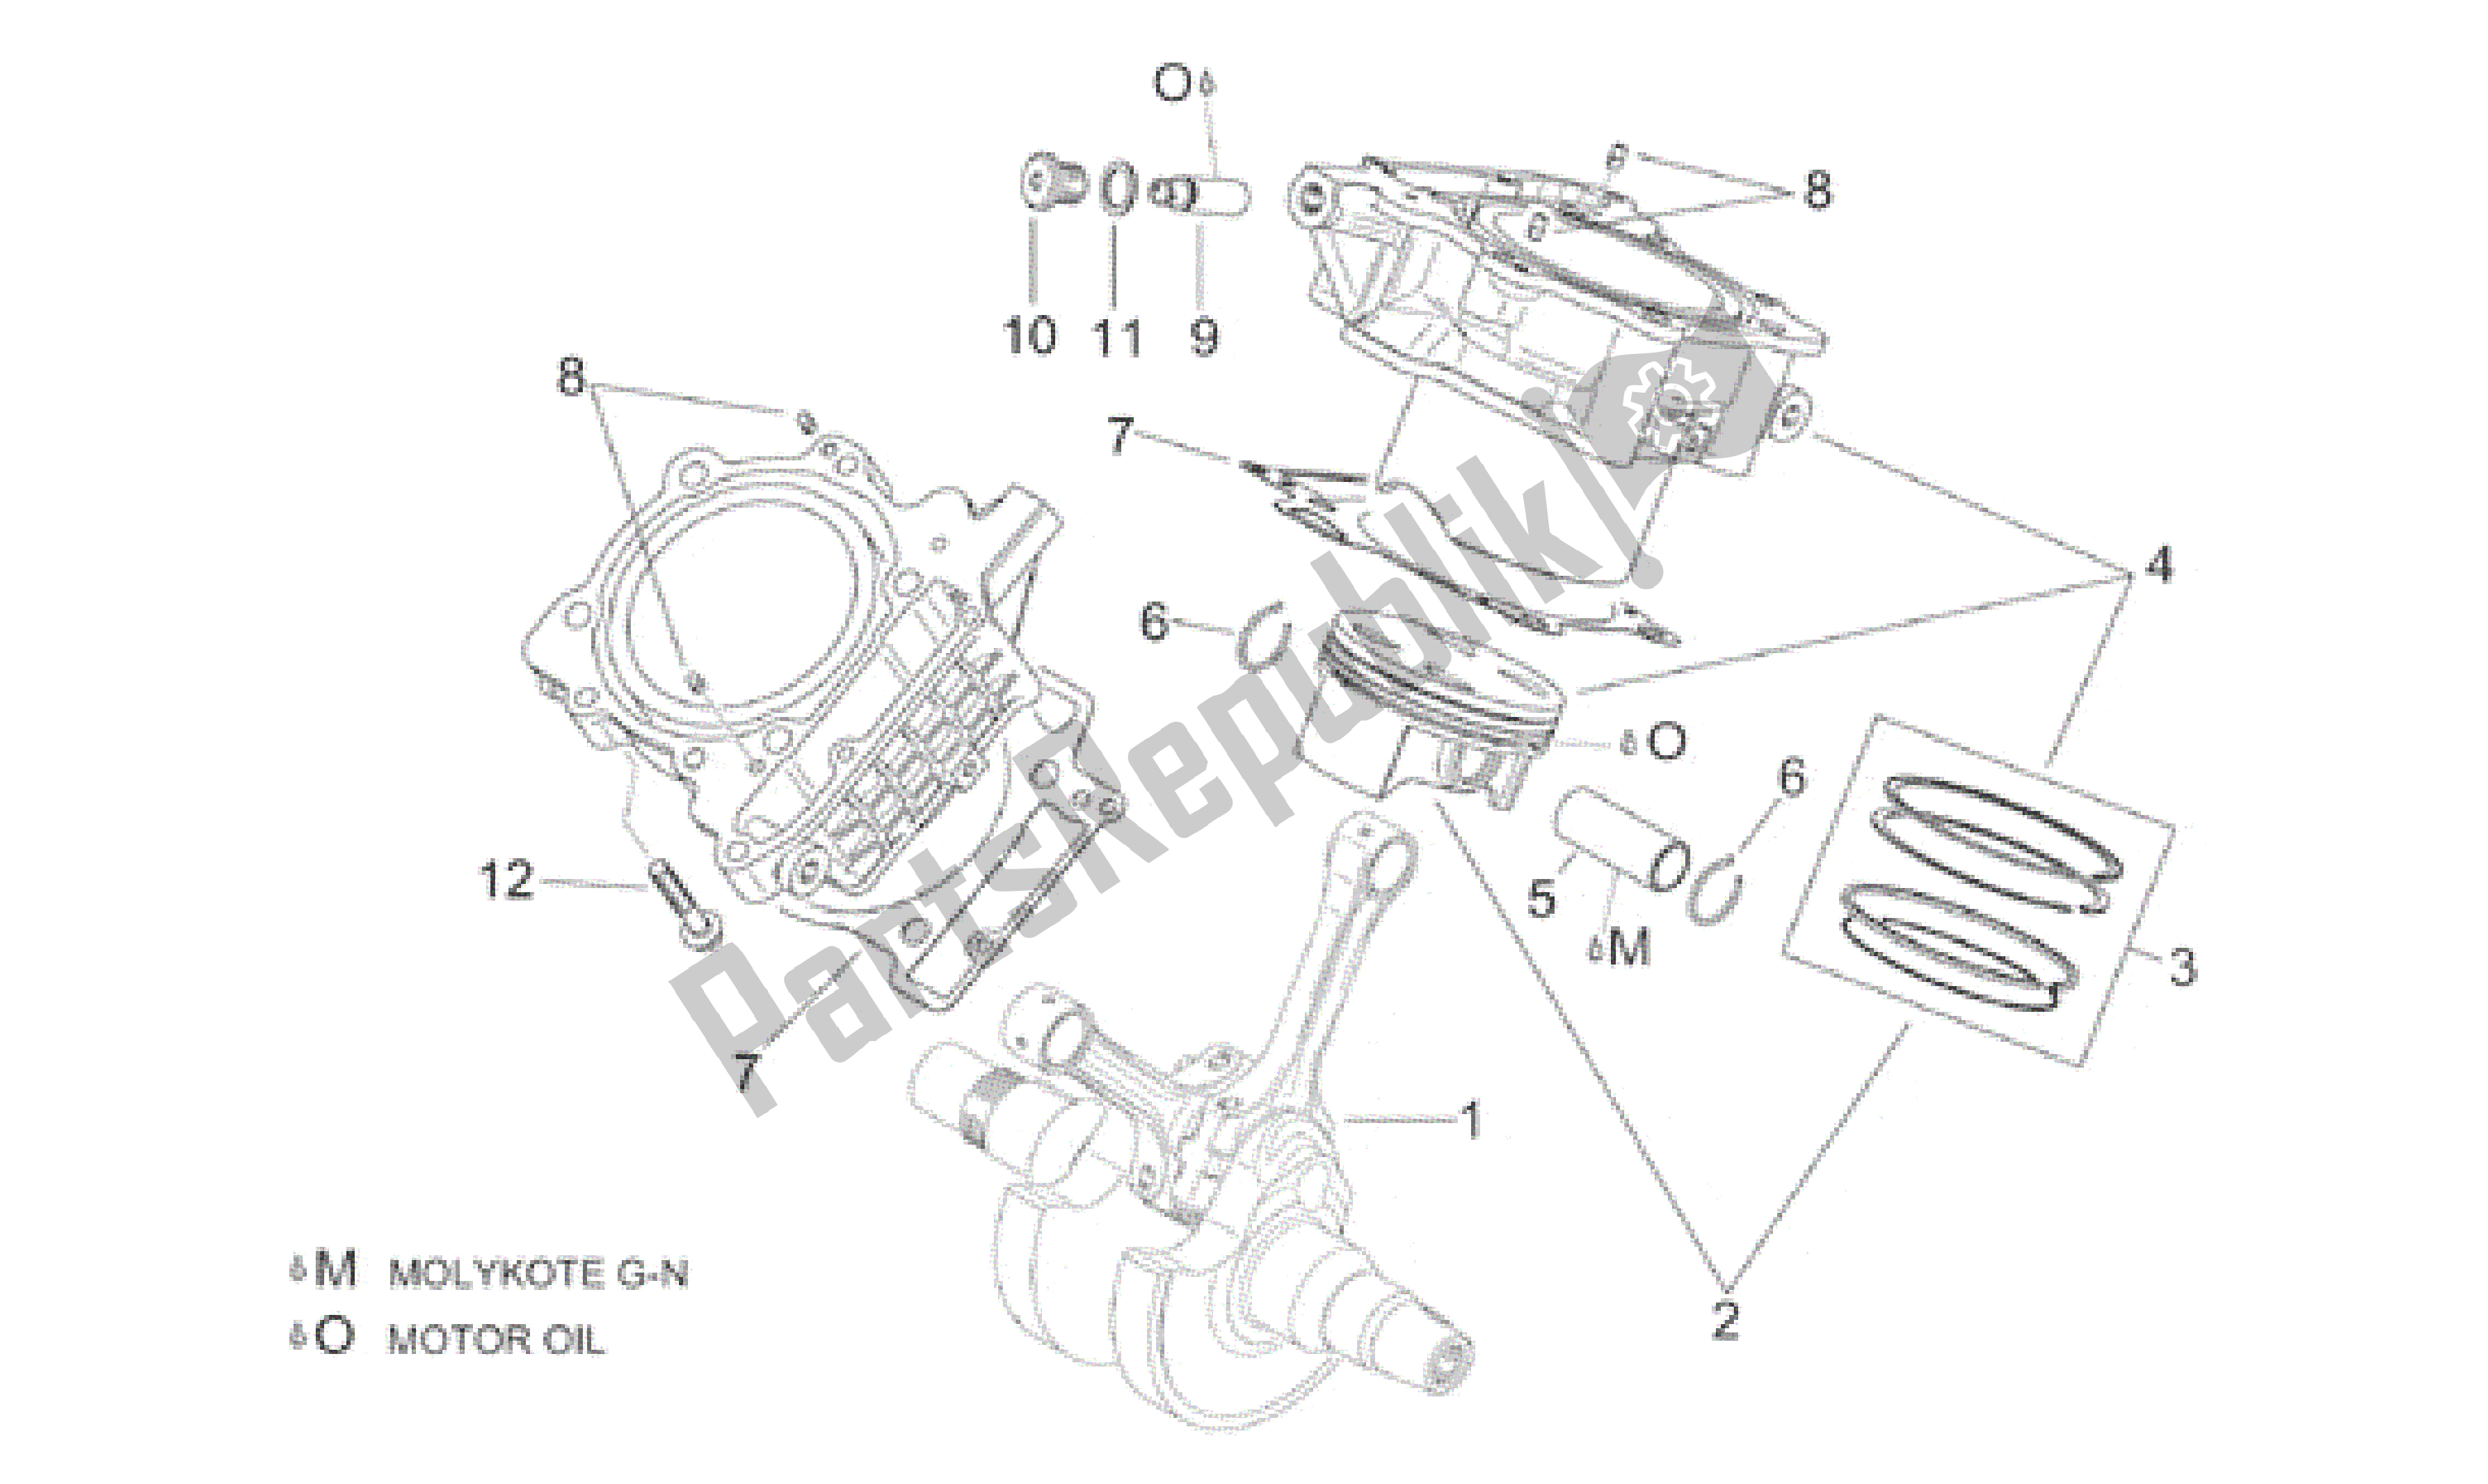 All parts for the Crankshaft Ii of the Aprilia RSV Mille 390 W 1000 1998 - 1999